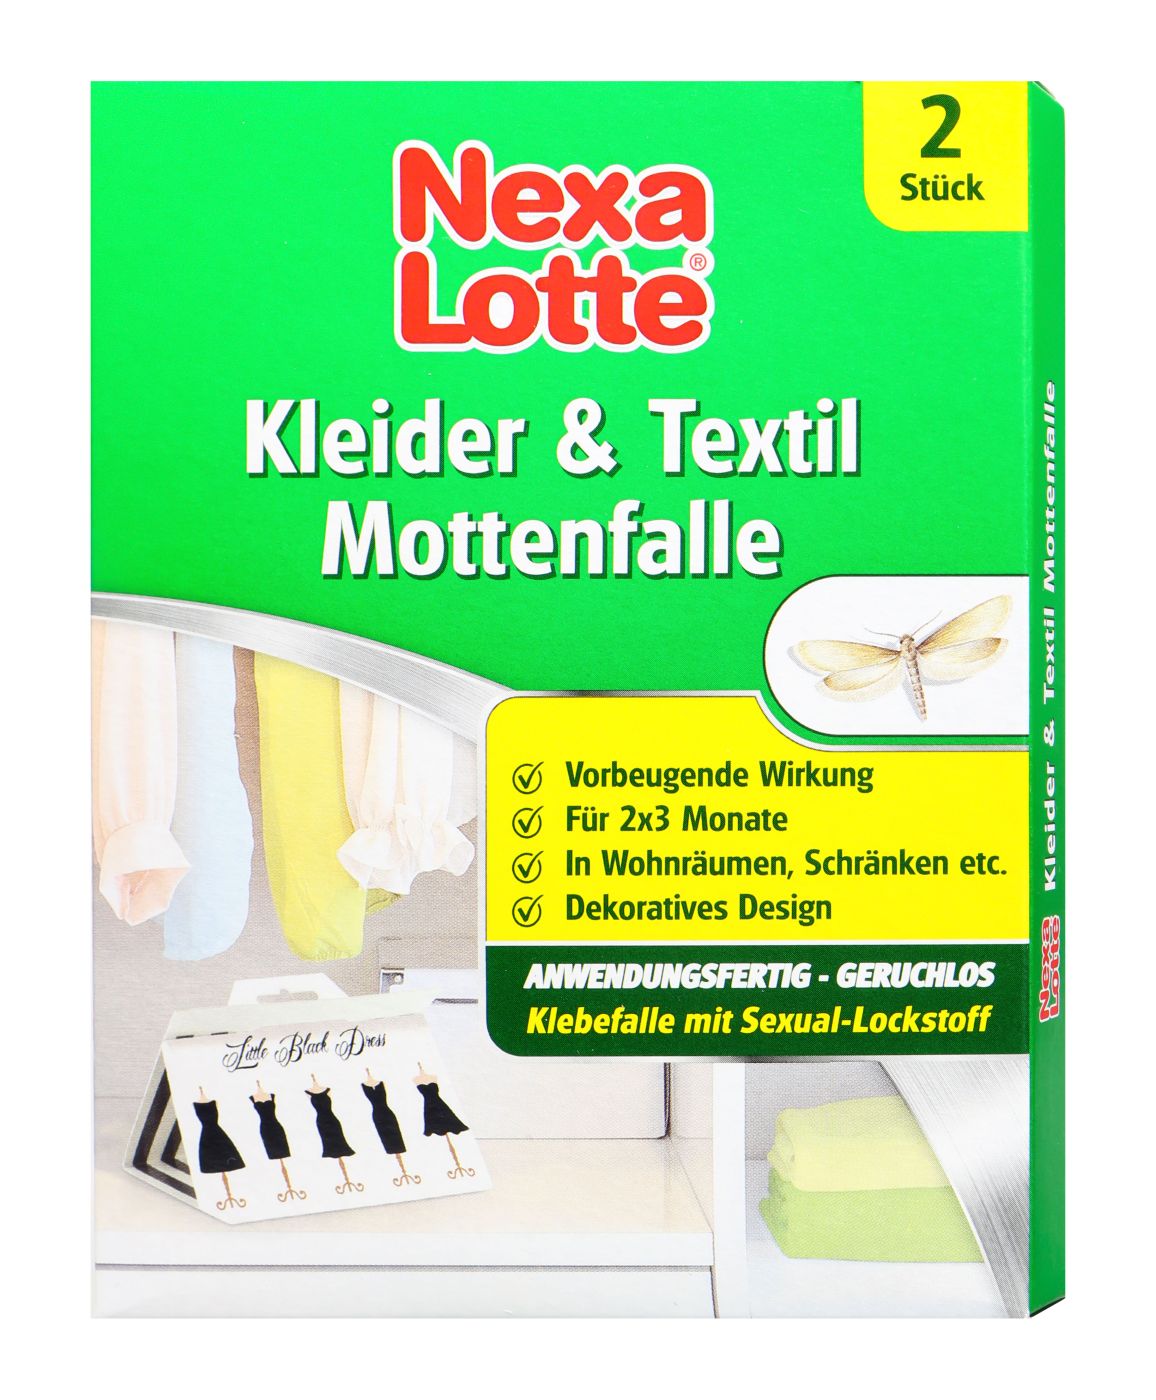 Nexa Lotte Kleider & Textil Mottenfalle - 2 Stück